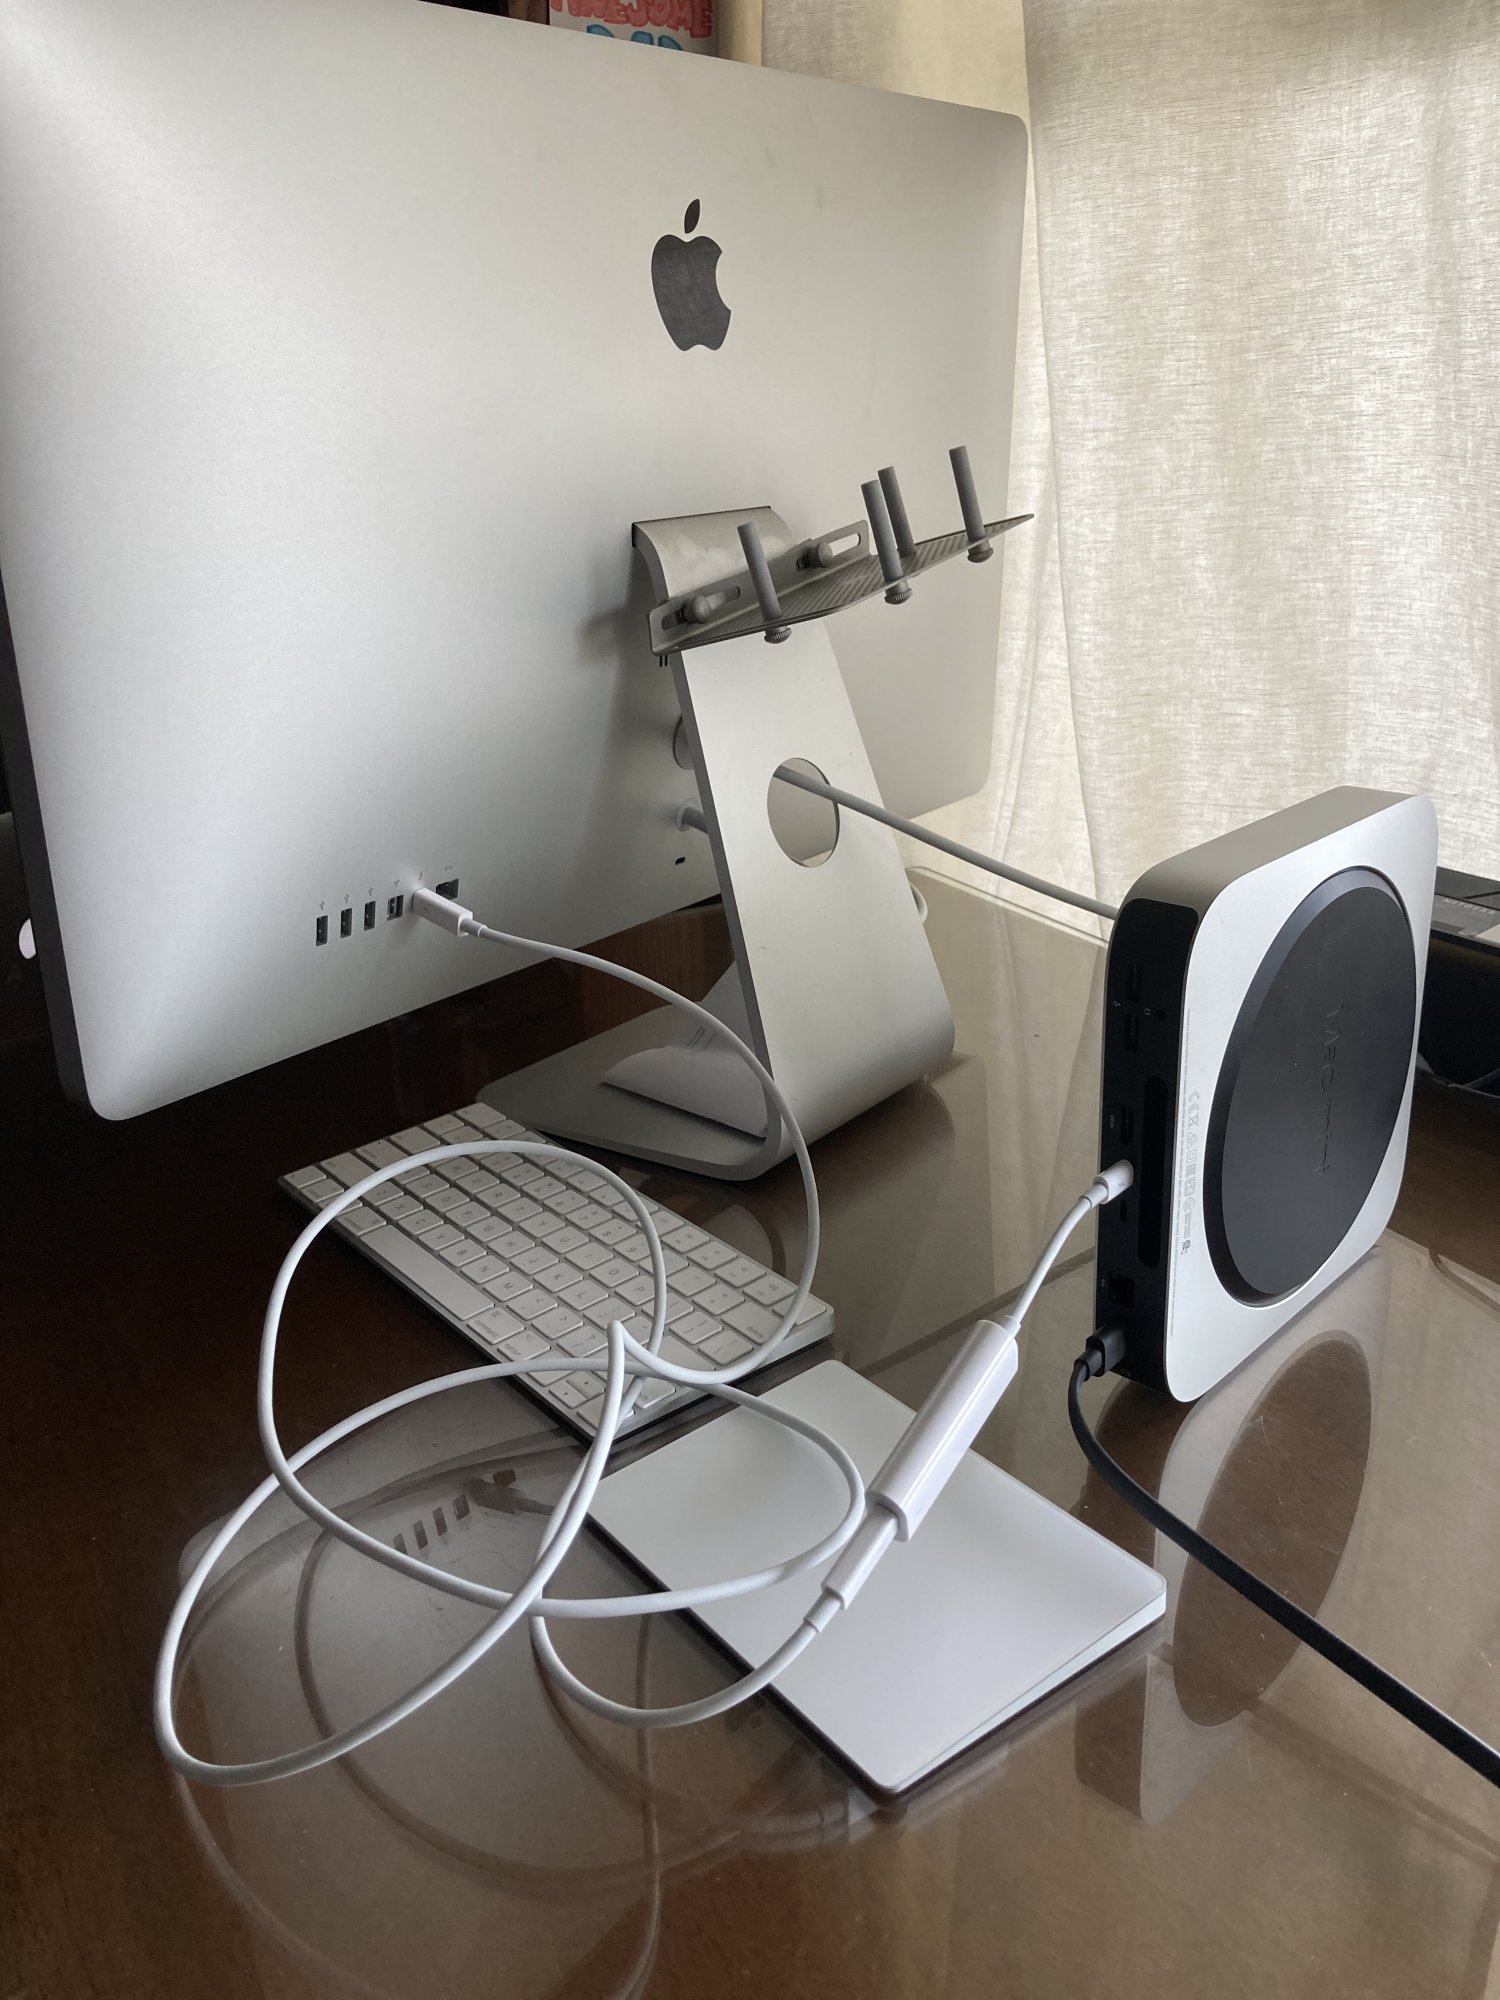 27" Apple Display M1 Mac Mini | Page 2 | MacRumors Forums